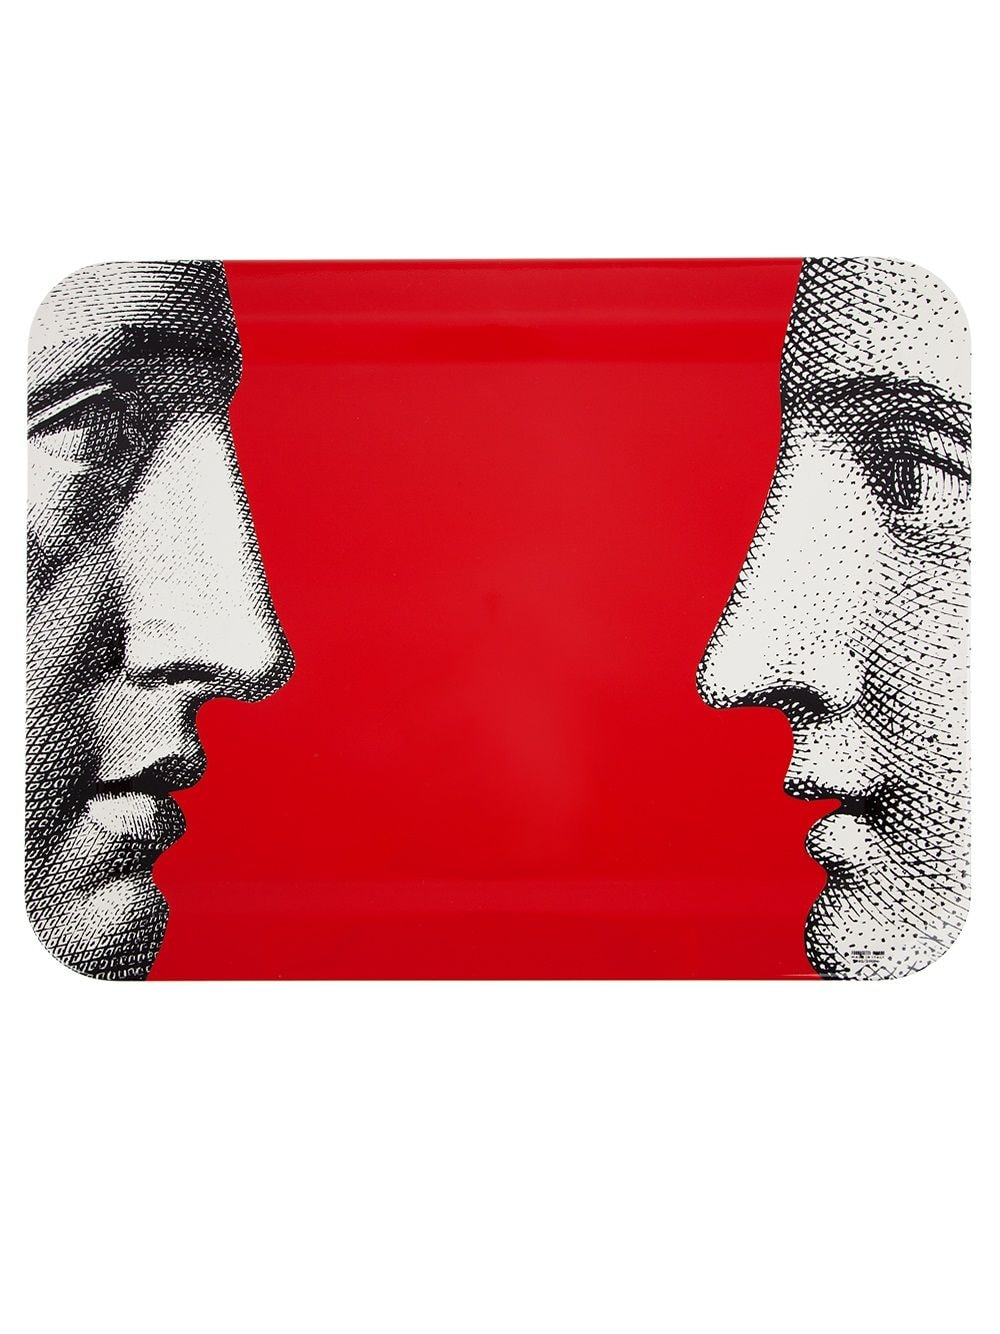 Fornasetti 'Profile On Red' Tablett - Rot von Fornasetti